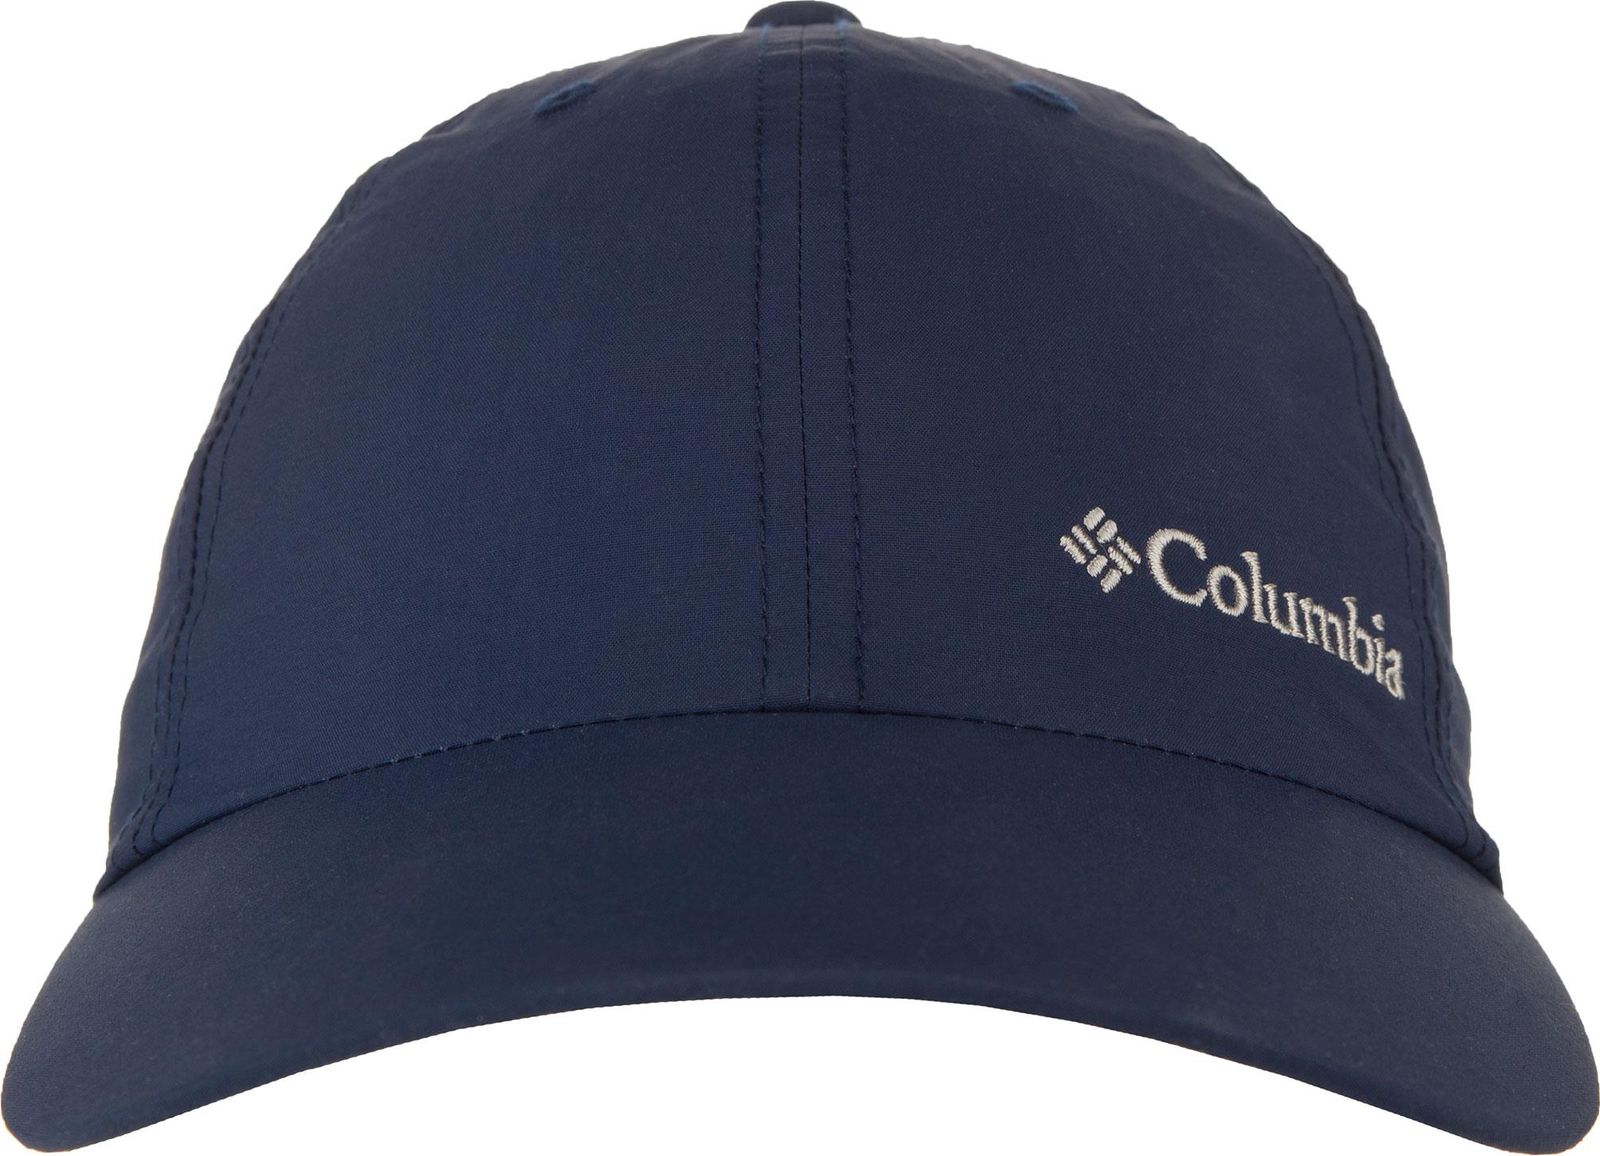 M 2 hat. Columbia Tech Shade II hat. Бейсболка Columbia Tech Shade II Ball cap. Кепка коламбия. Зимняя кепка коламбия мужская.